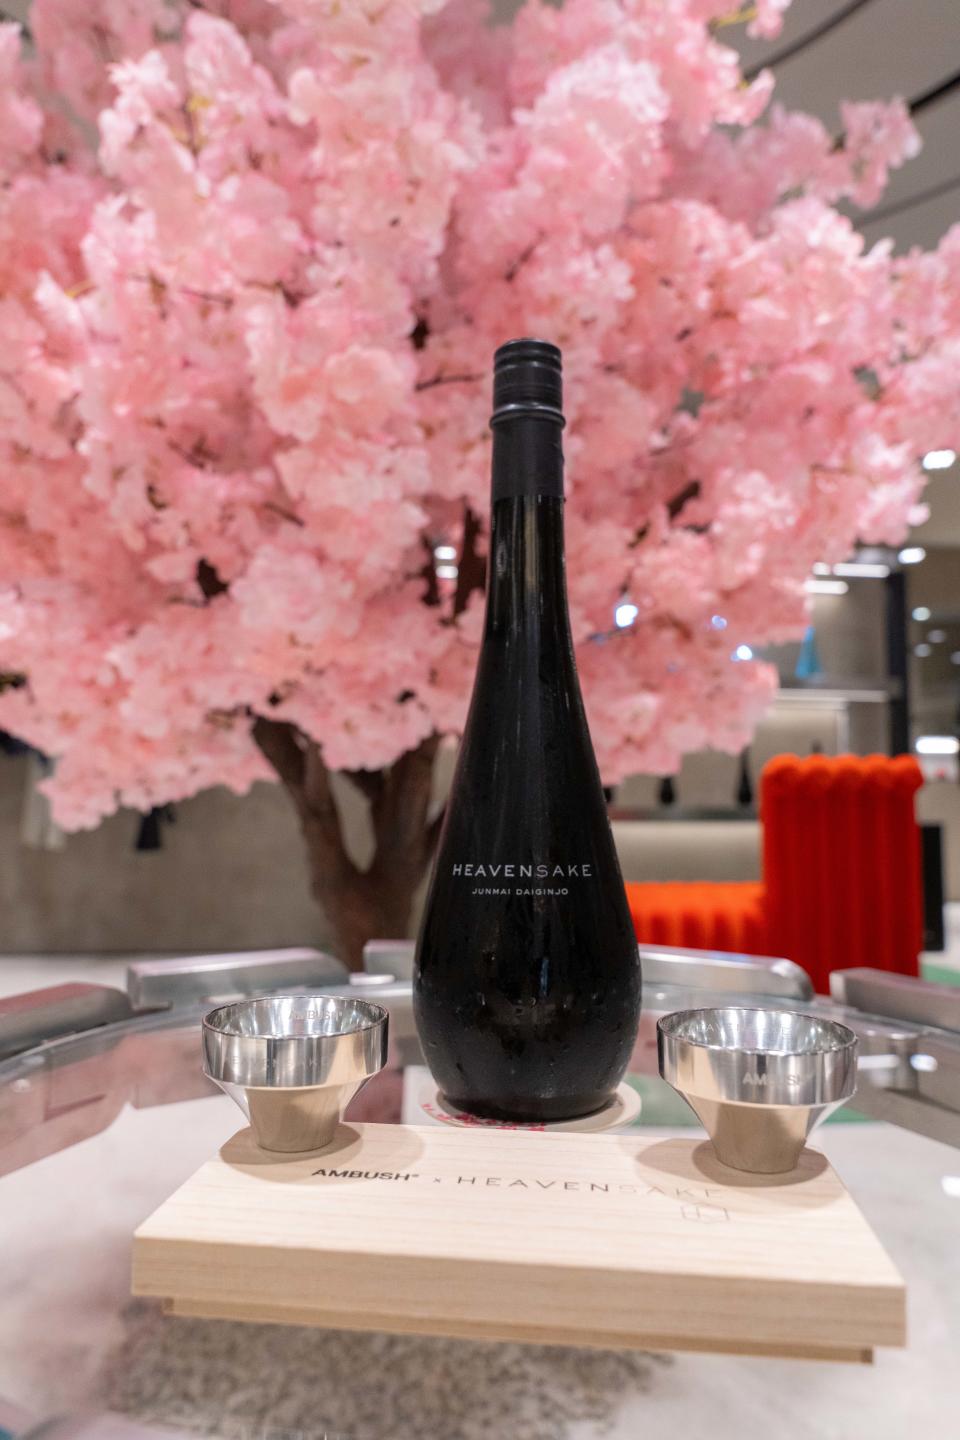 The sake cups designed by Ambush’s Yoon in collaboration with sake brand Heavensake.